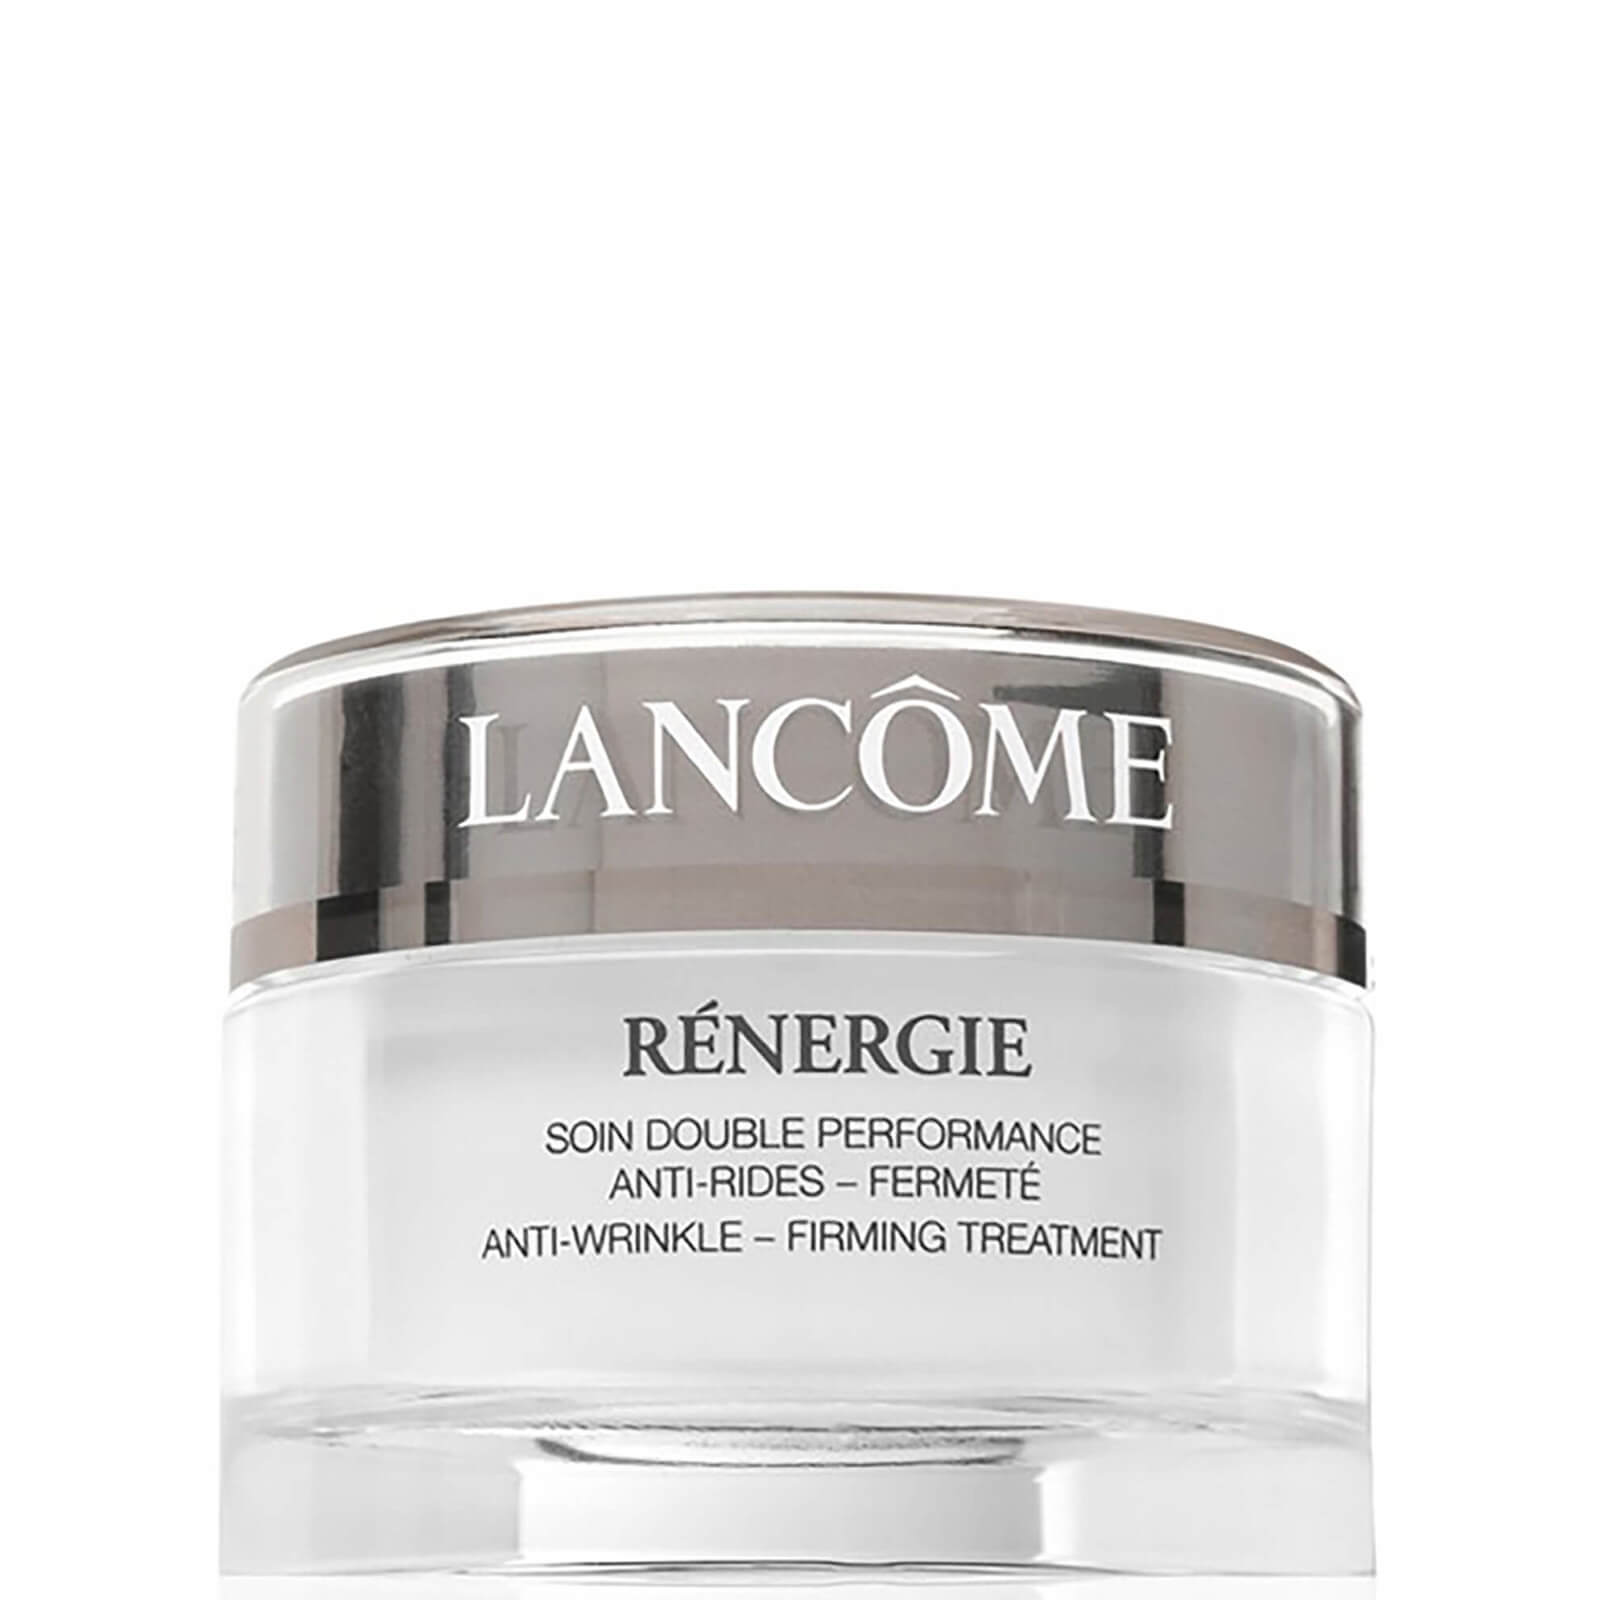 Lancome Renergie Day Cream 50ml